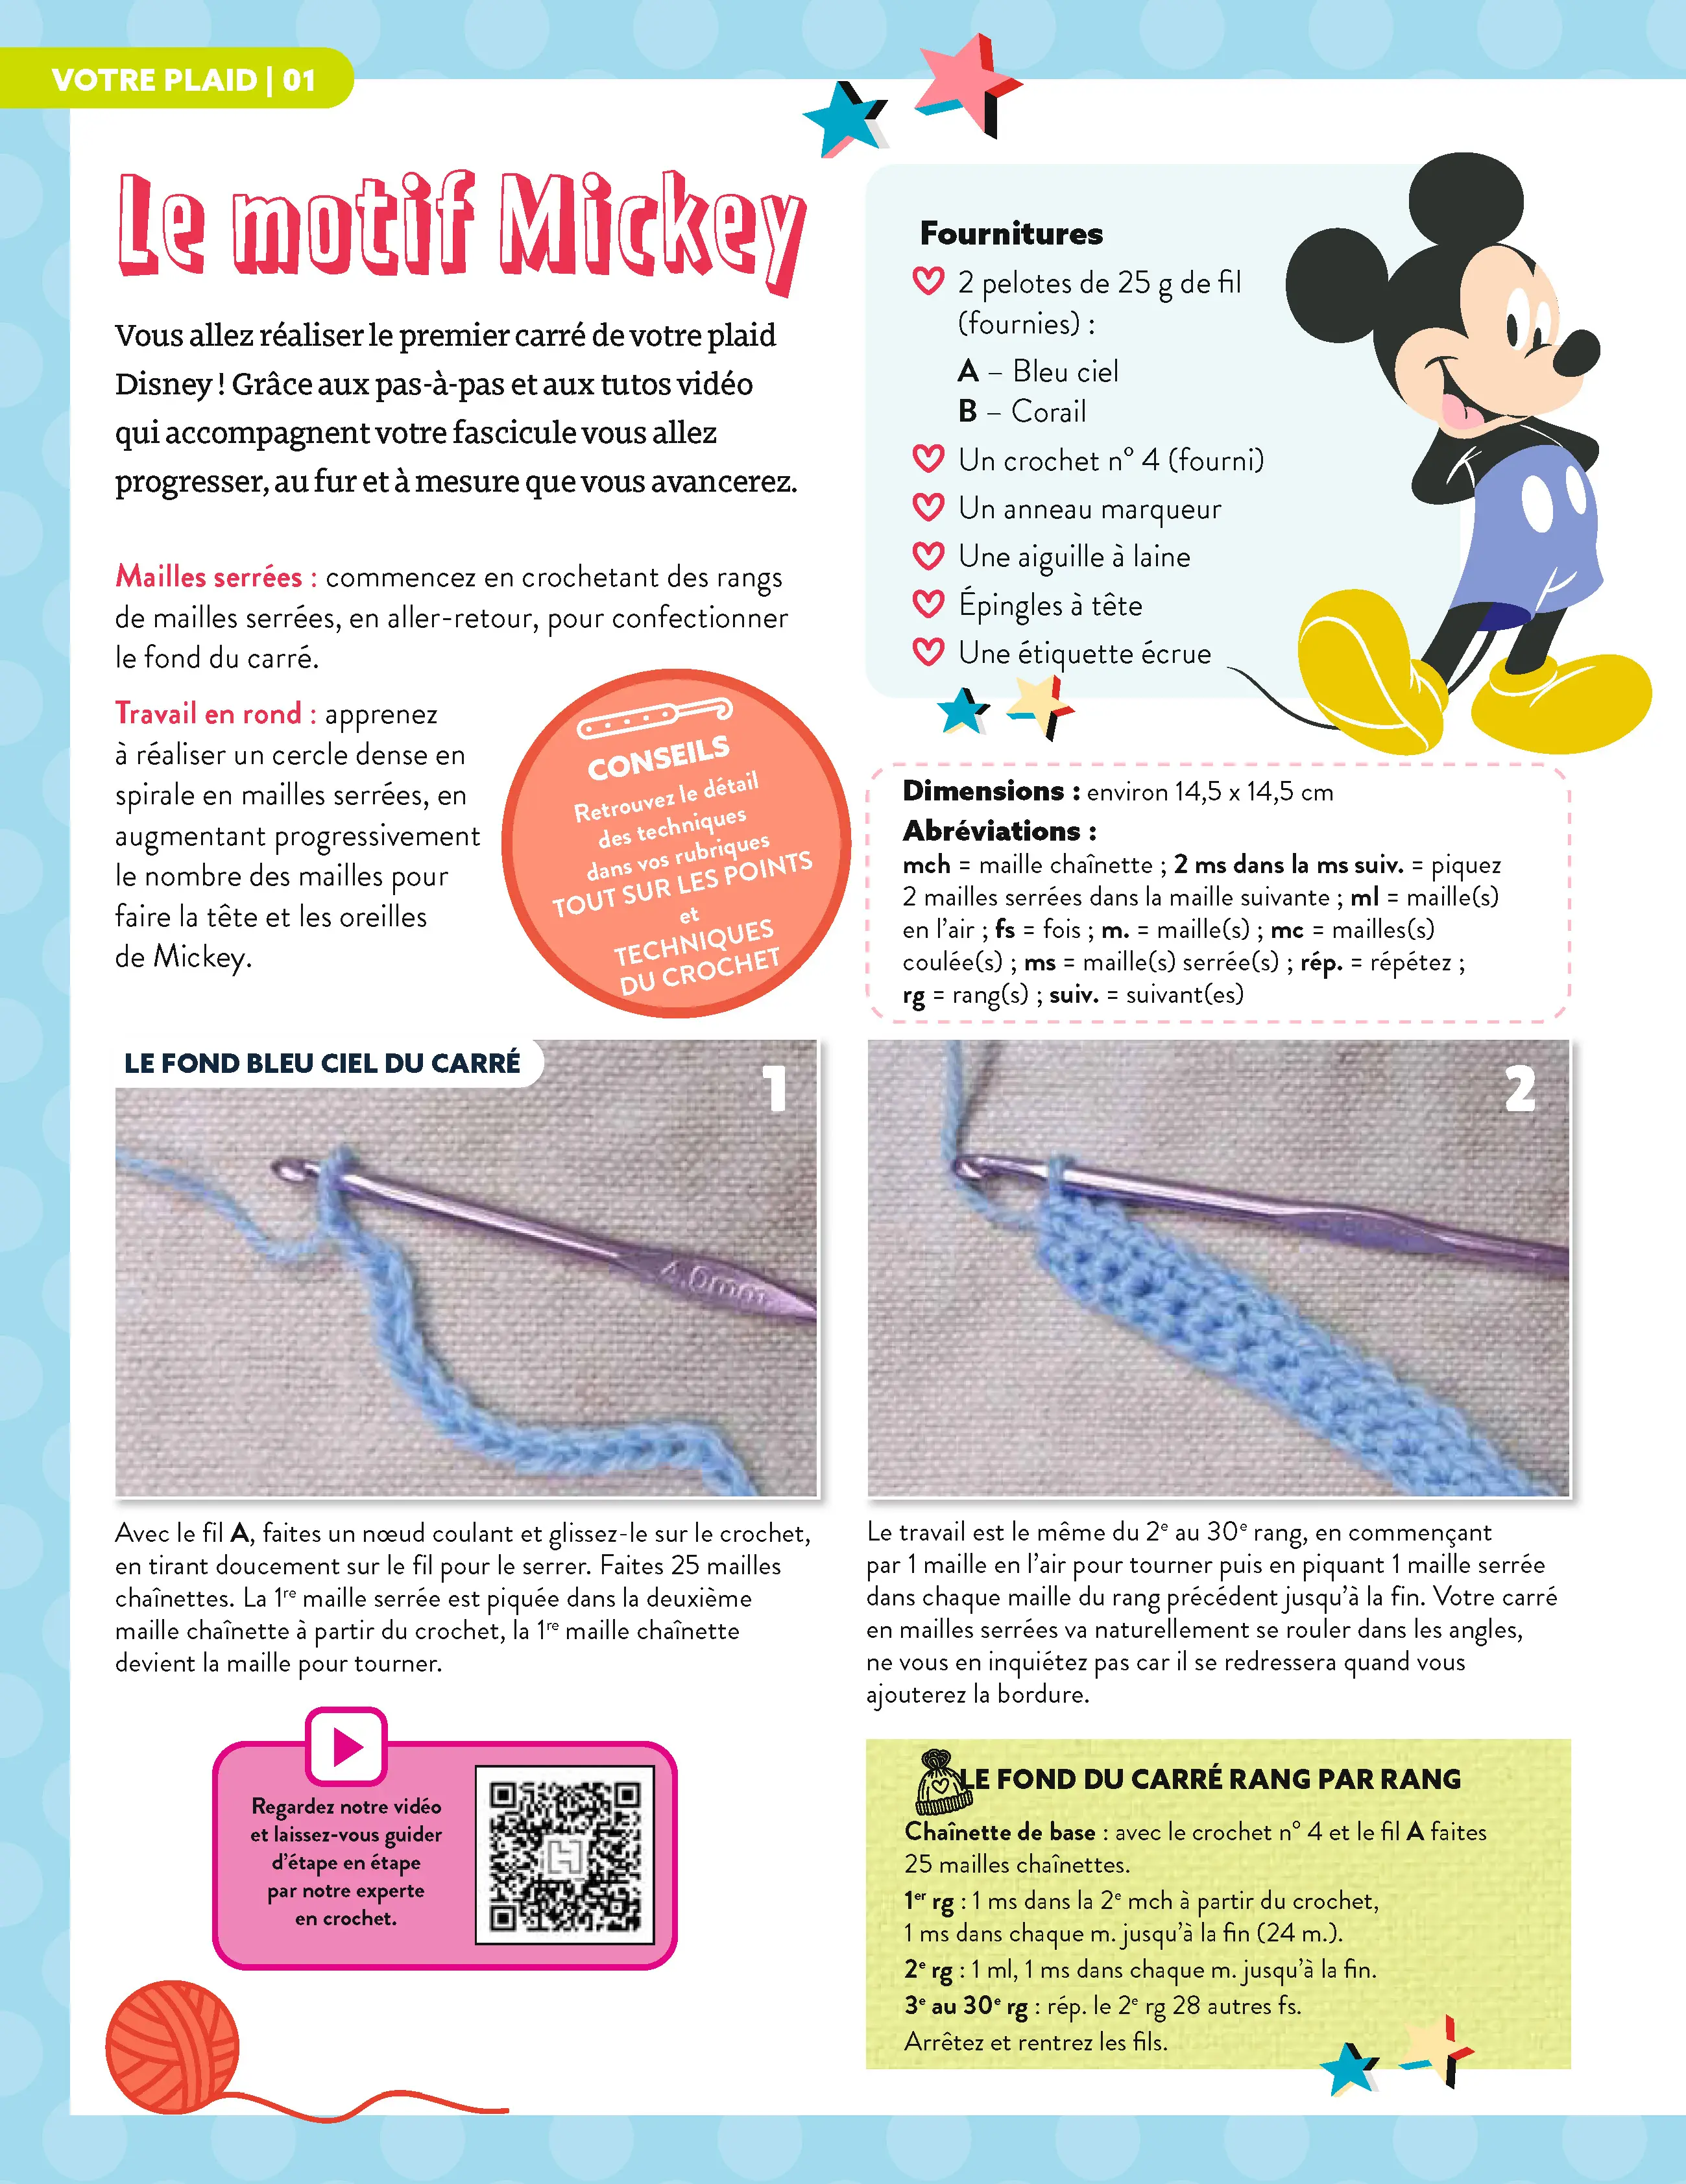 Le fascicule Disney Crochet